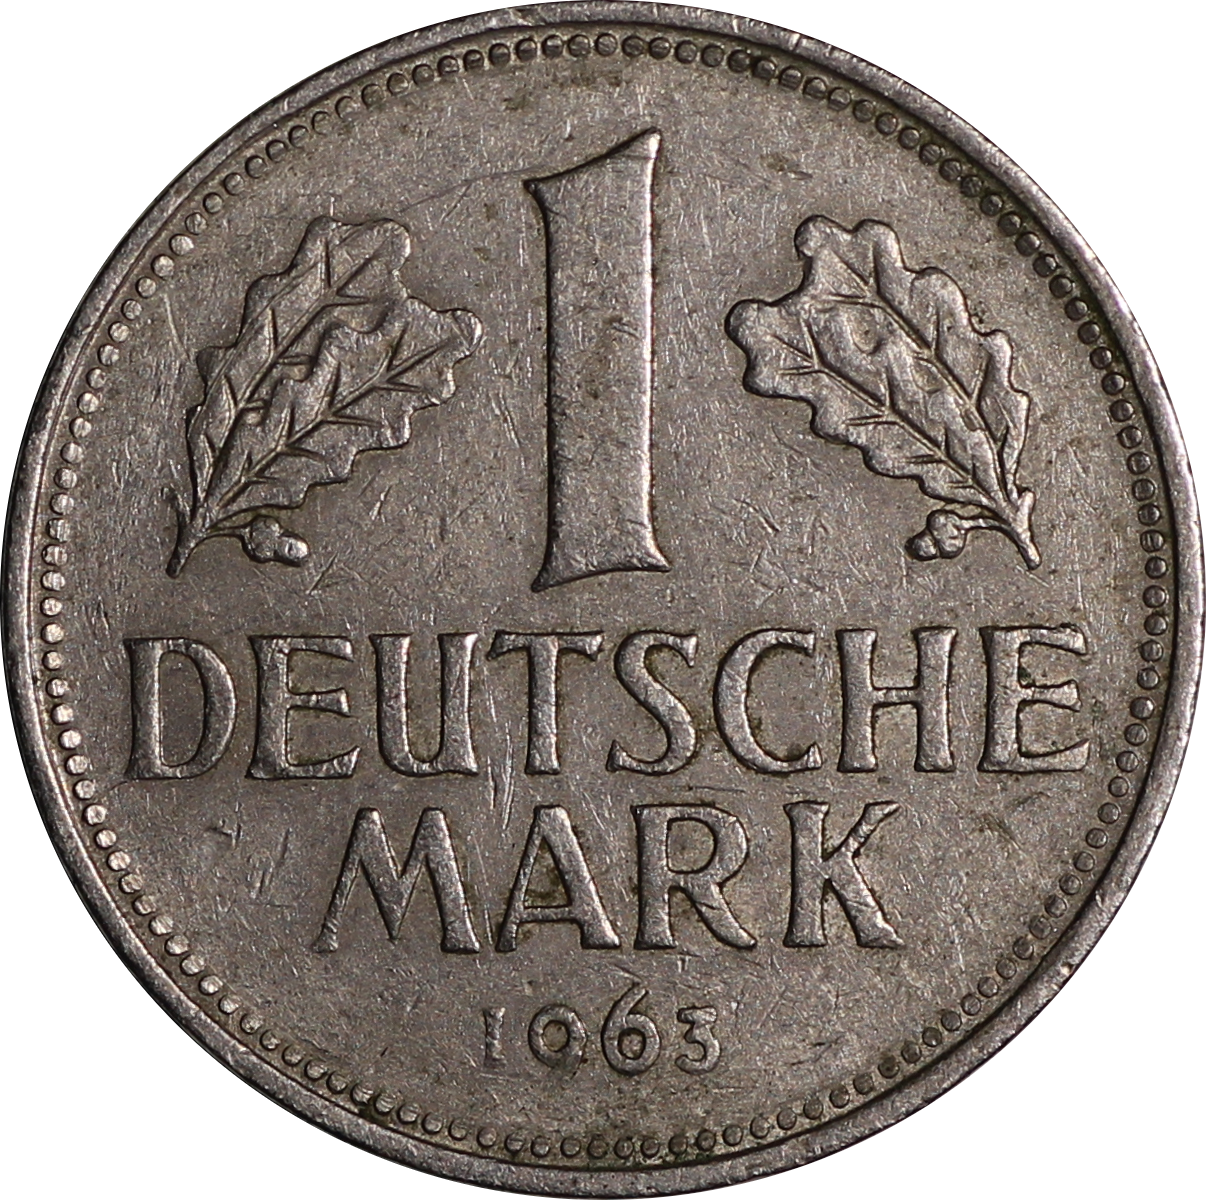 HQ Deutsche Mark Wallpapers | File 3015.56Kb